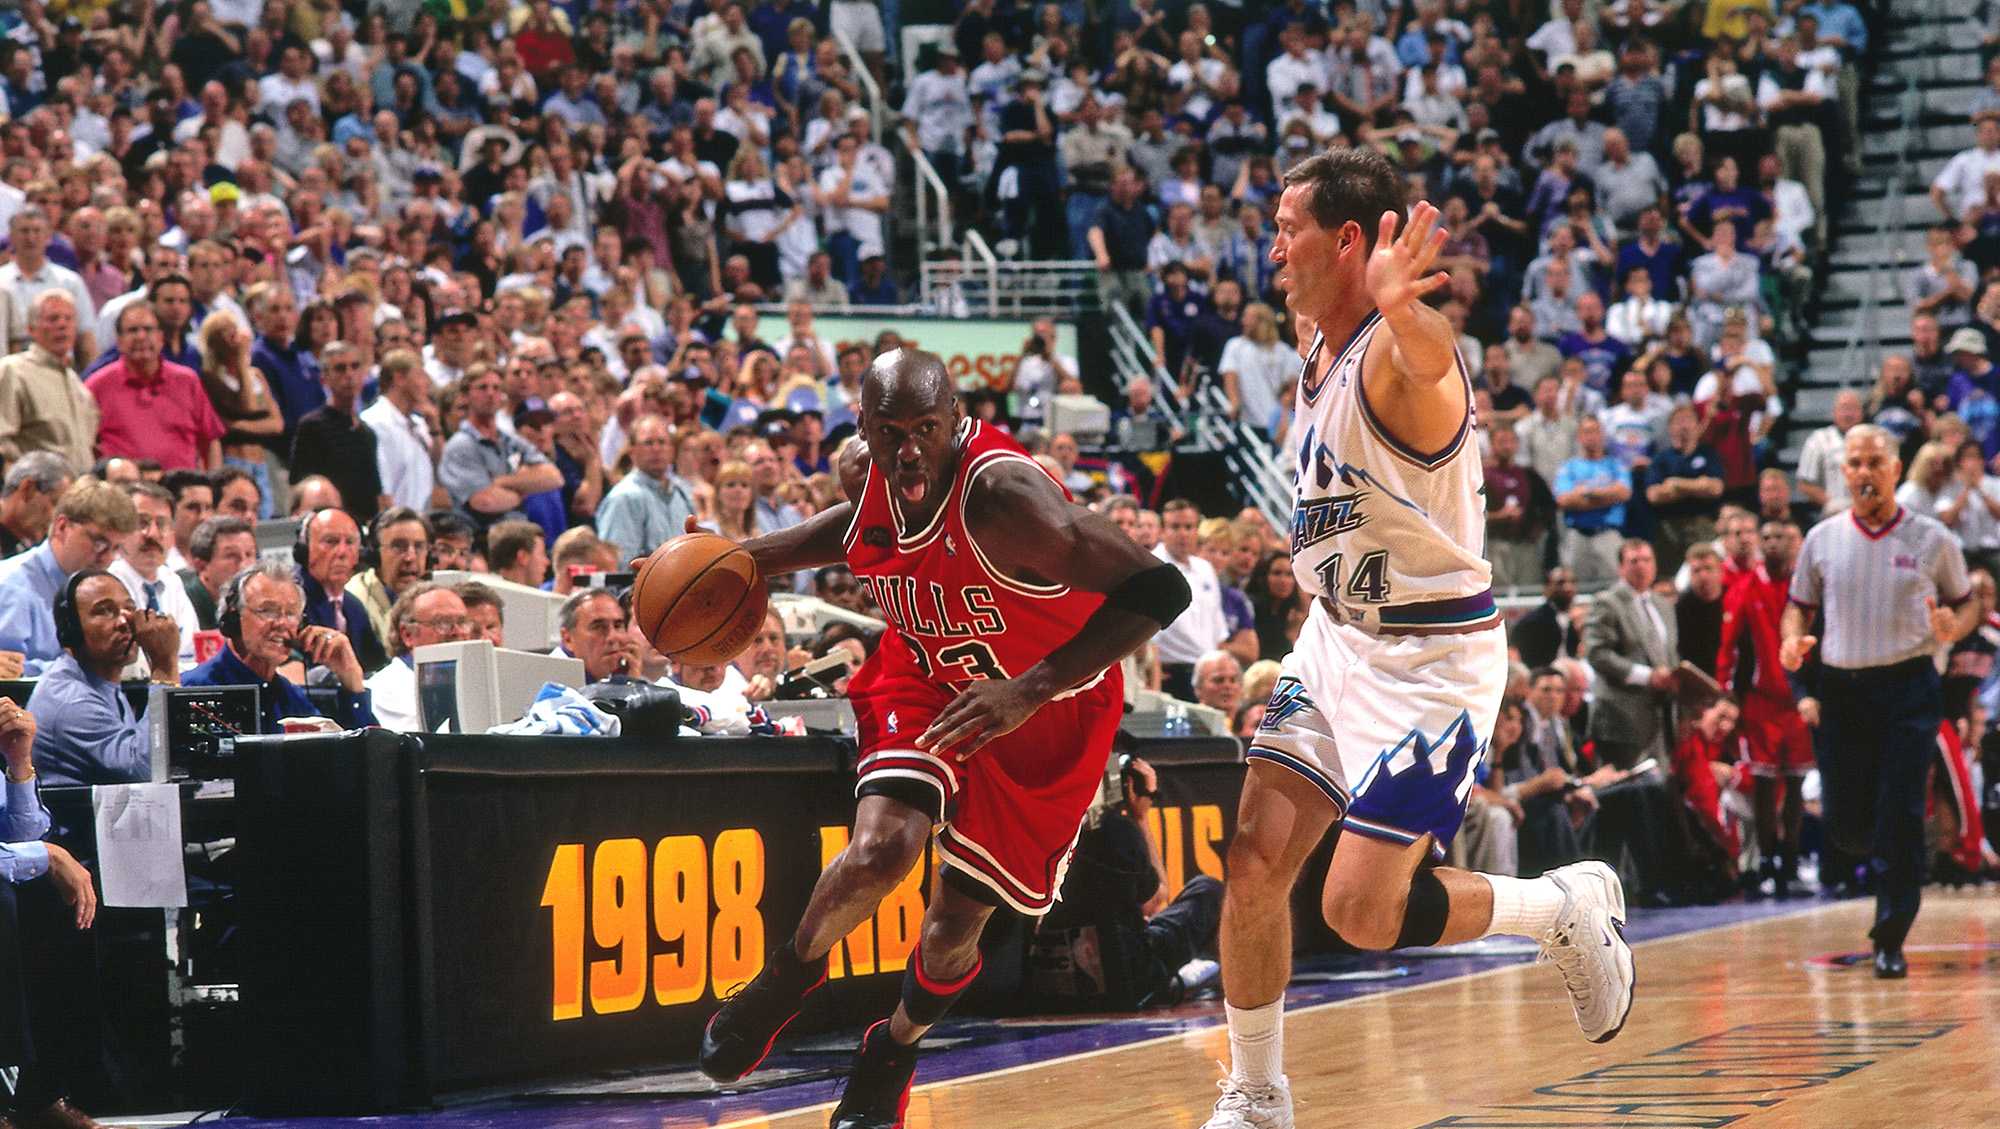 Chicago Bulls Michael Jordan Black White Red Jersey Size S M L